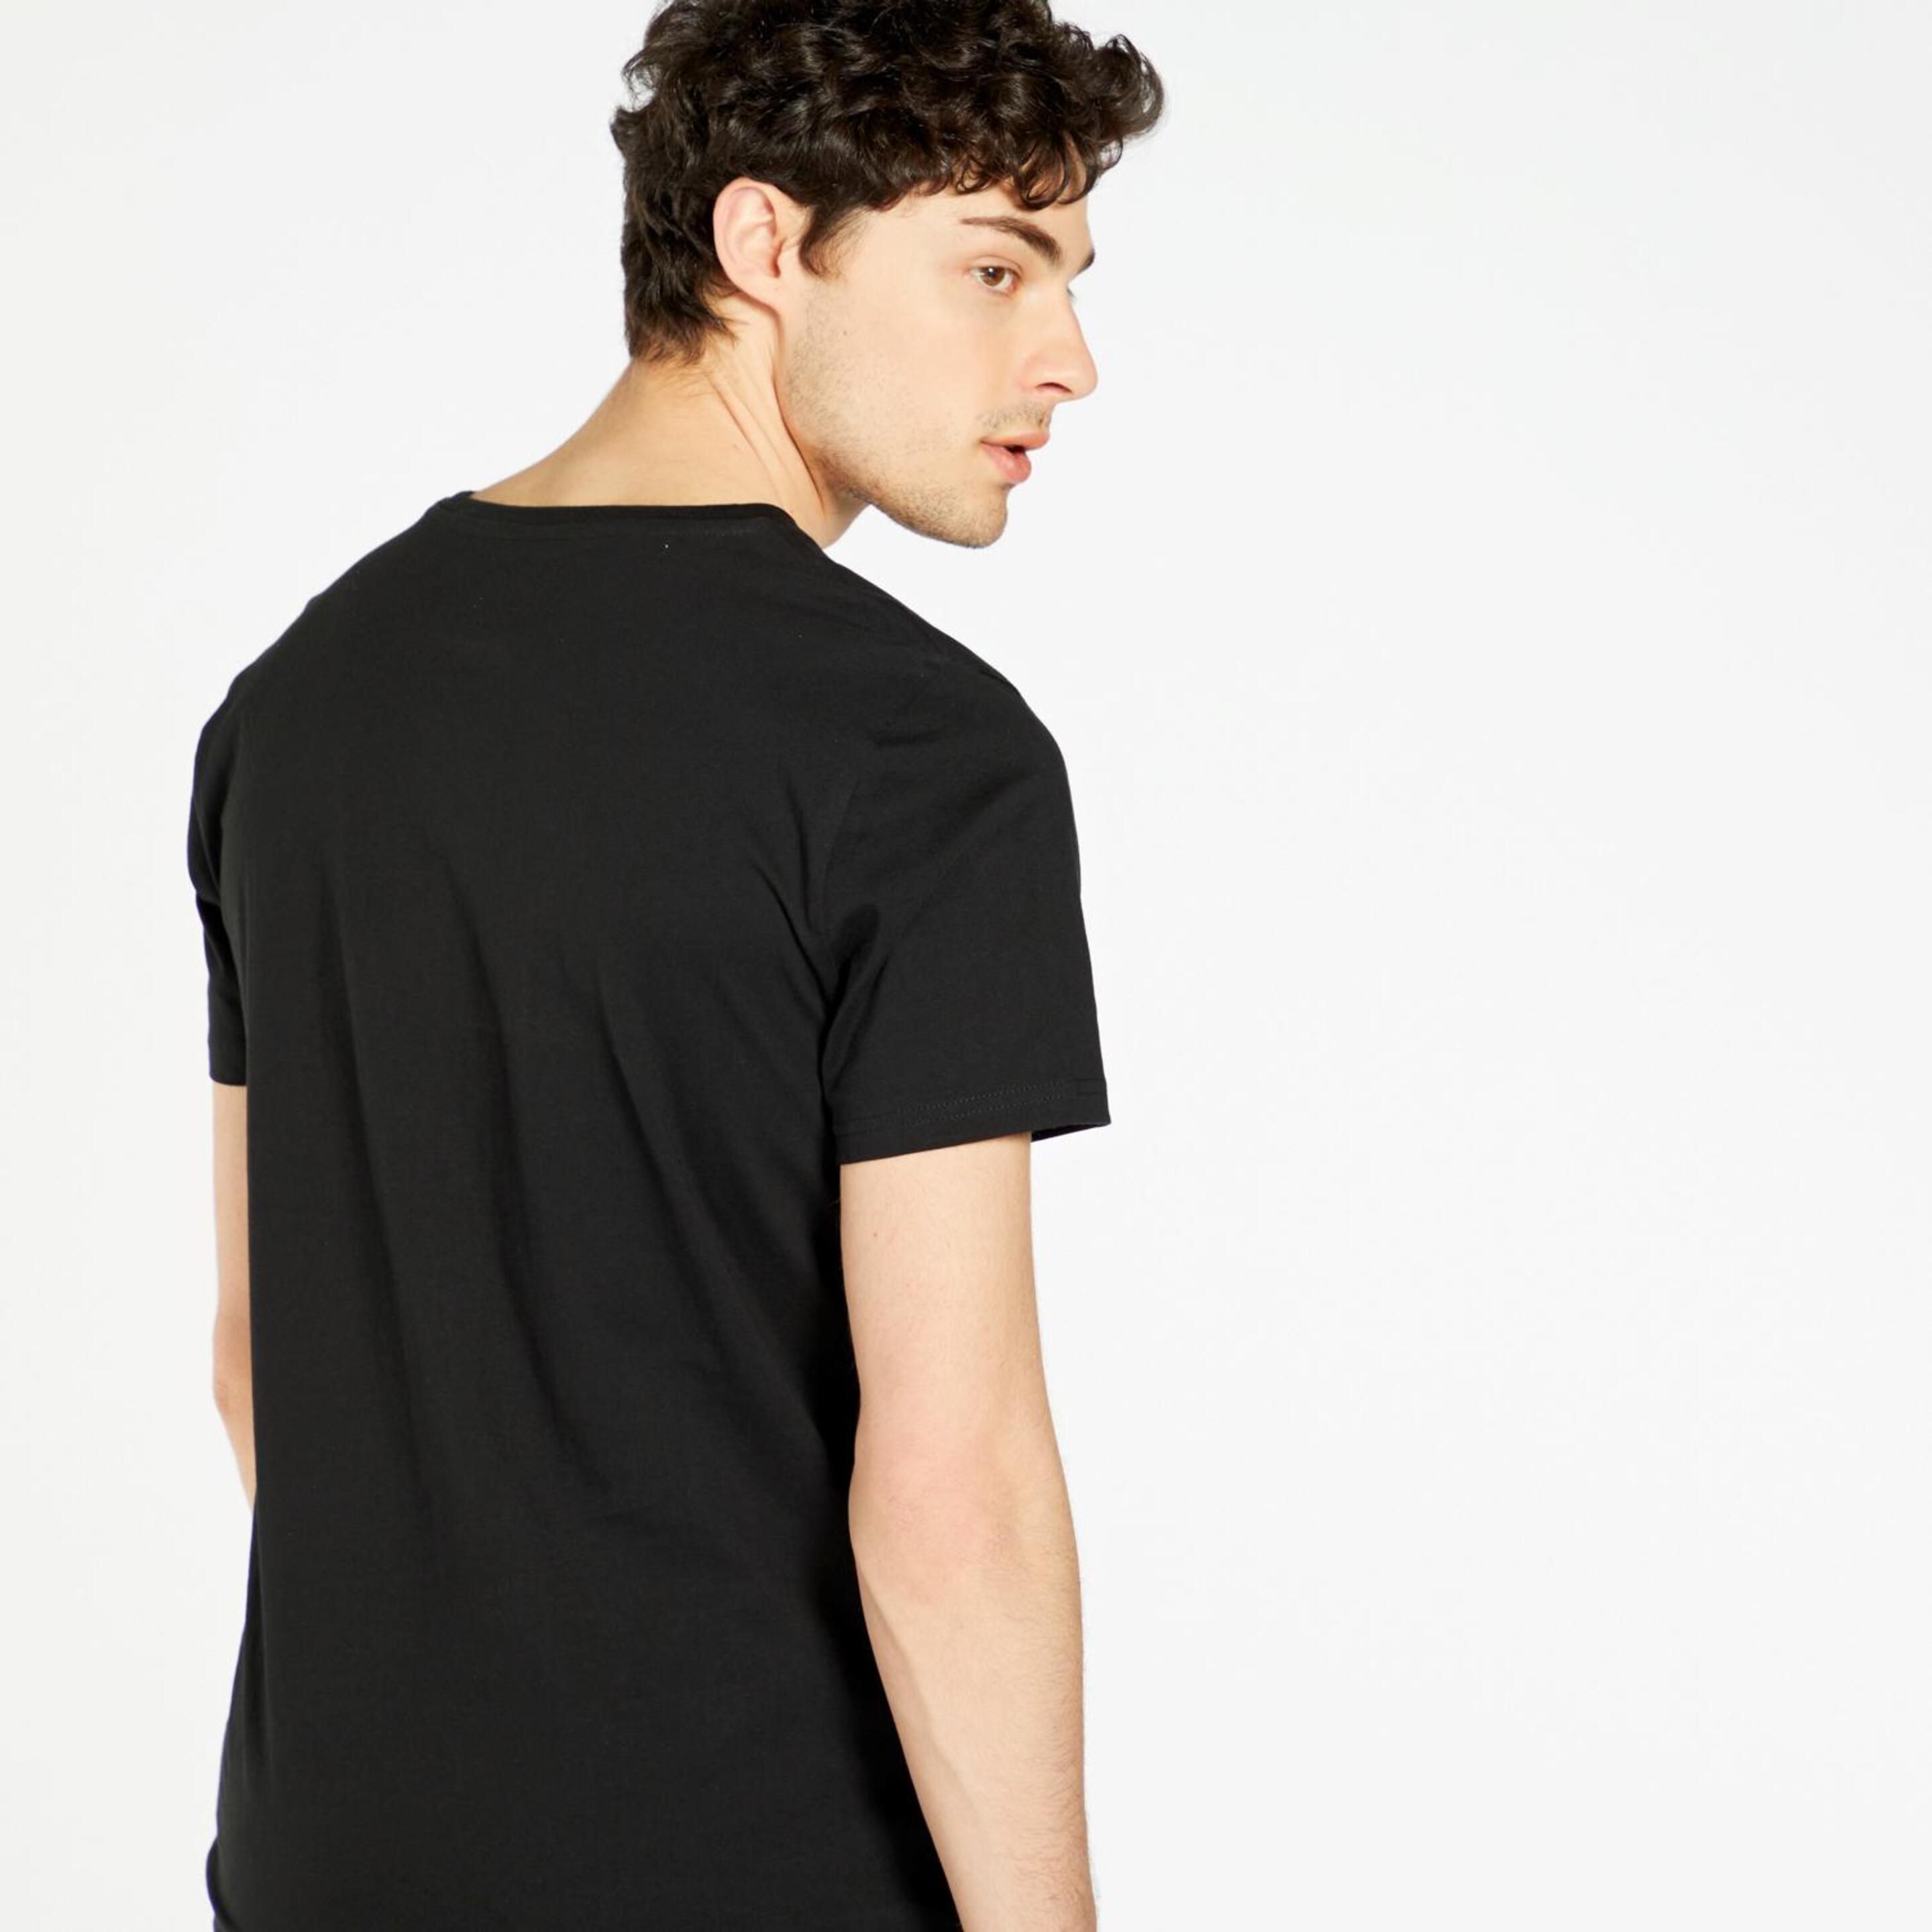 Camiseta Up - Negro - Camiseta Hombre